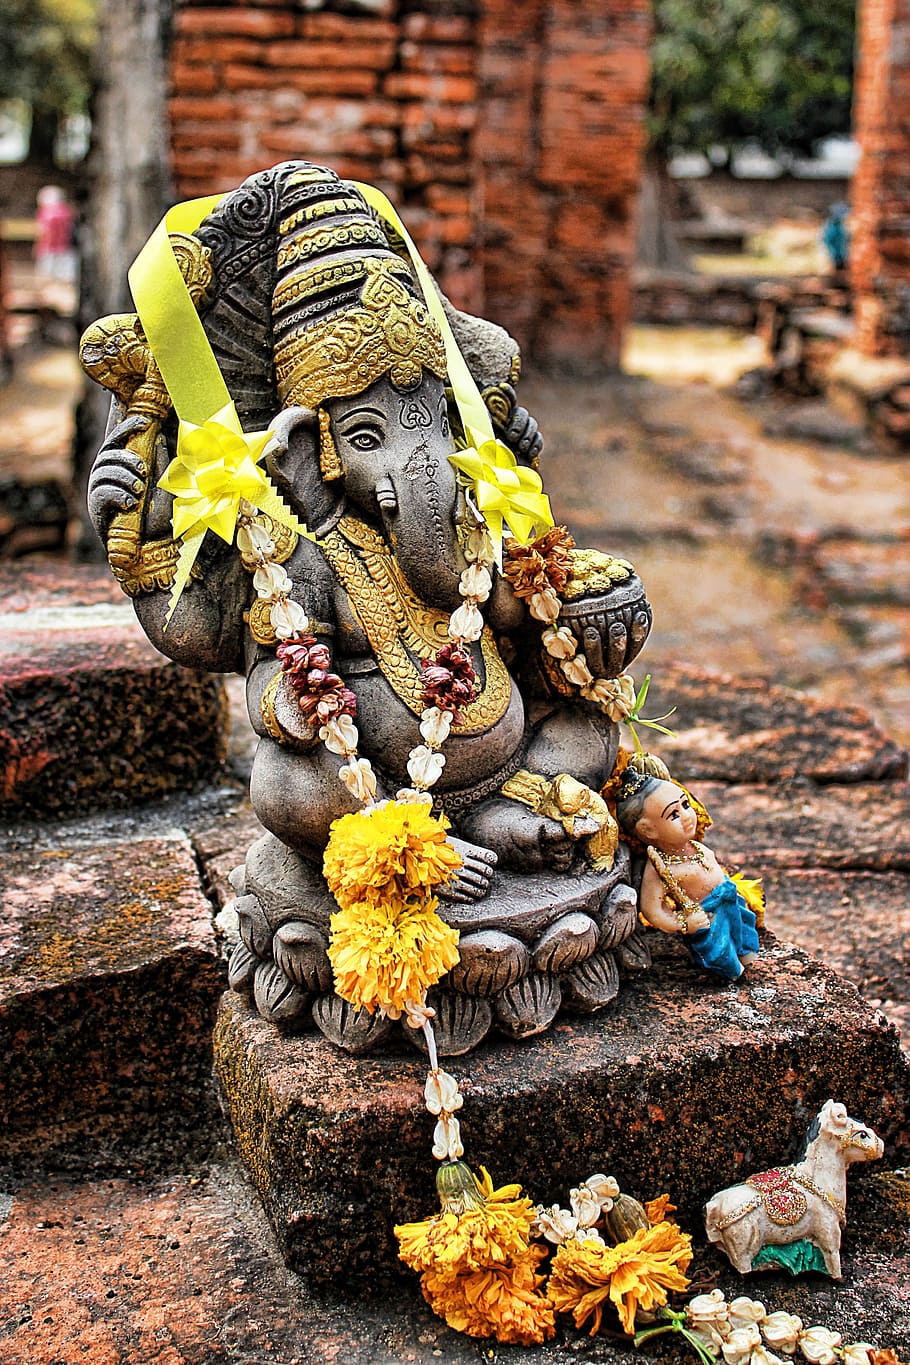 ganesha figurine, altar, thailand, hinduism, flowers, elephant, stone, offerings, sculpture, representation